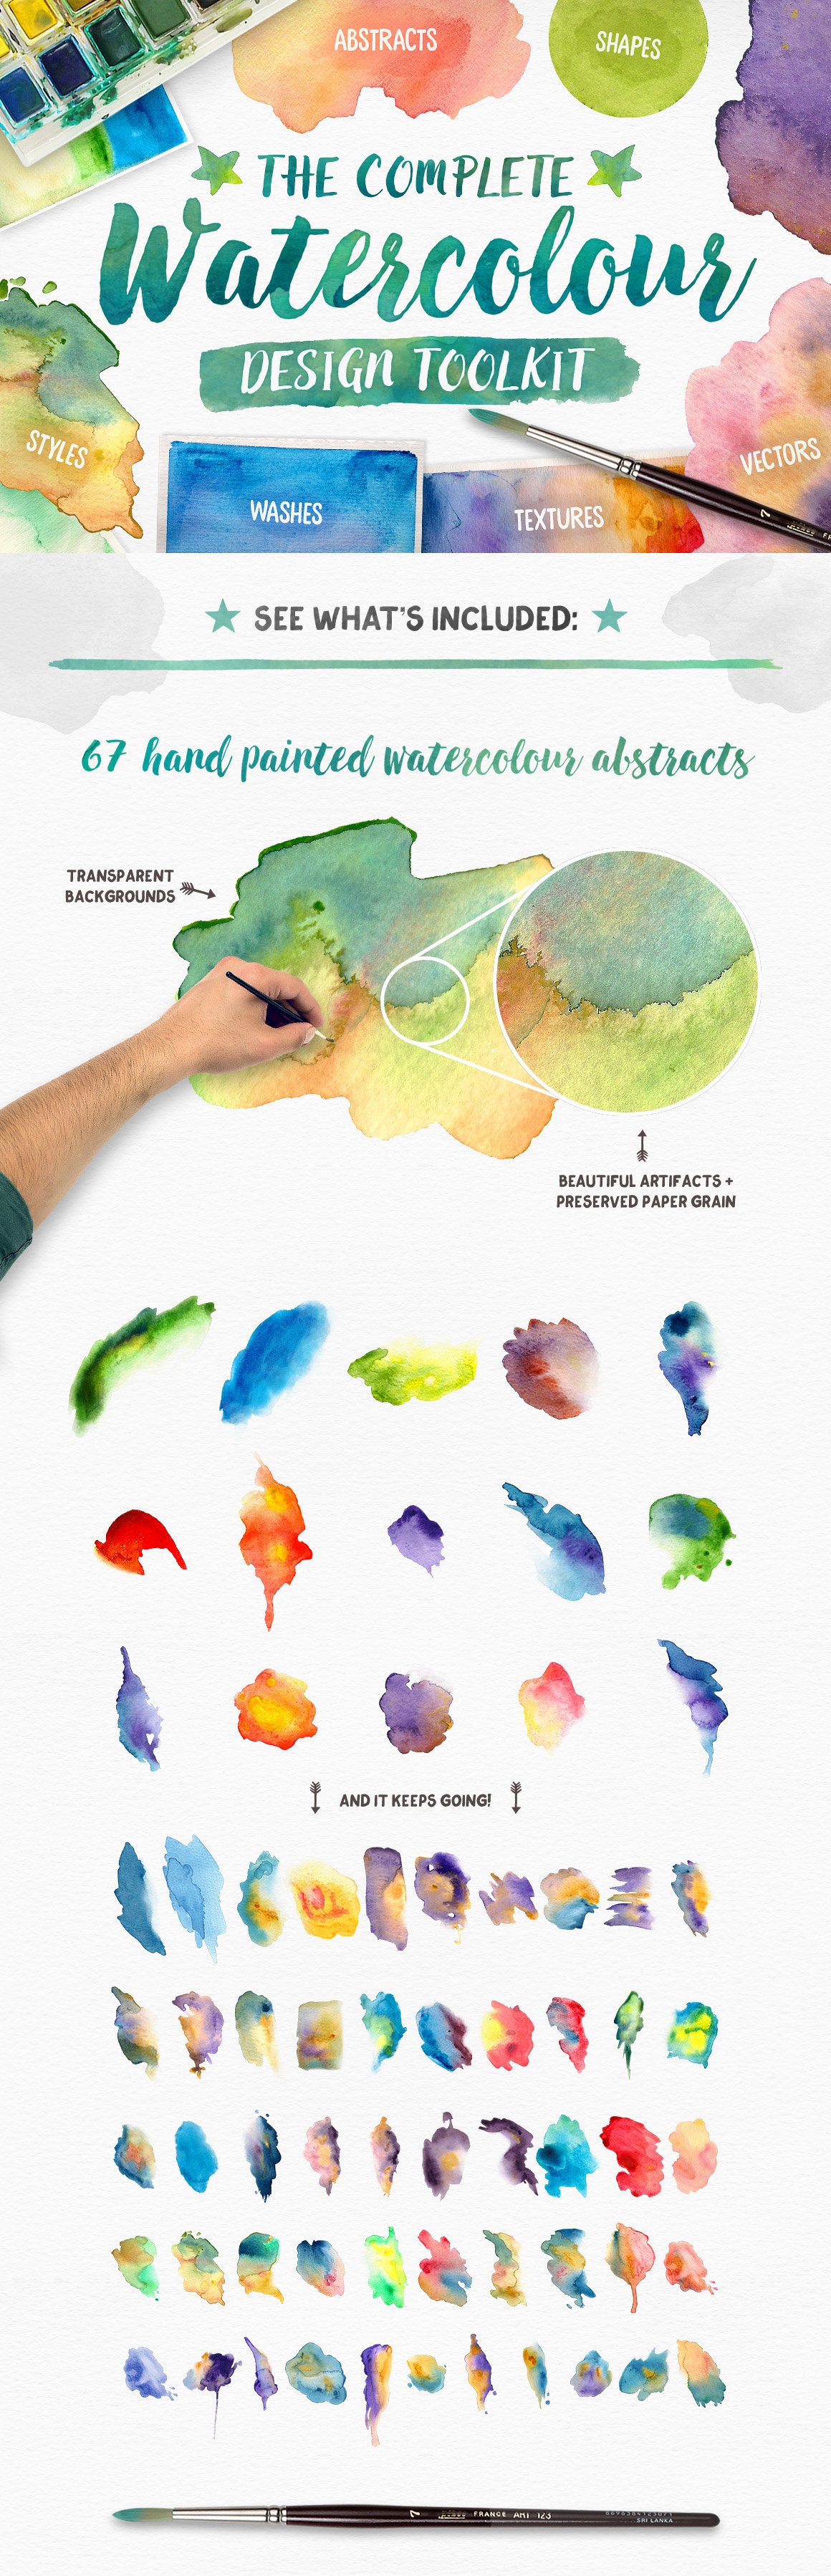 watercolour design toolkit